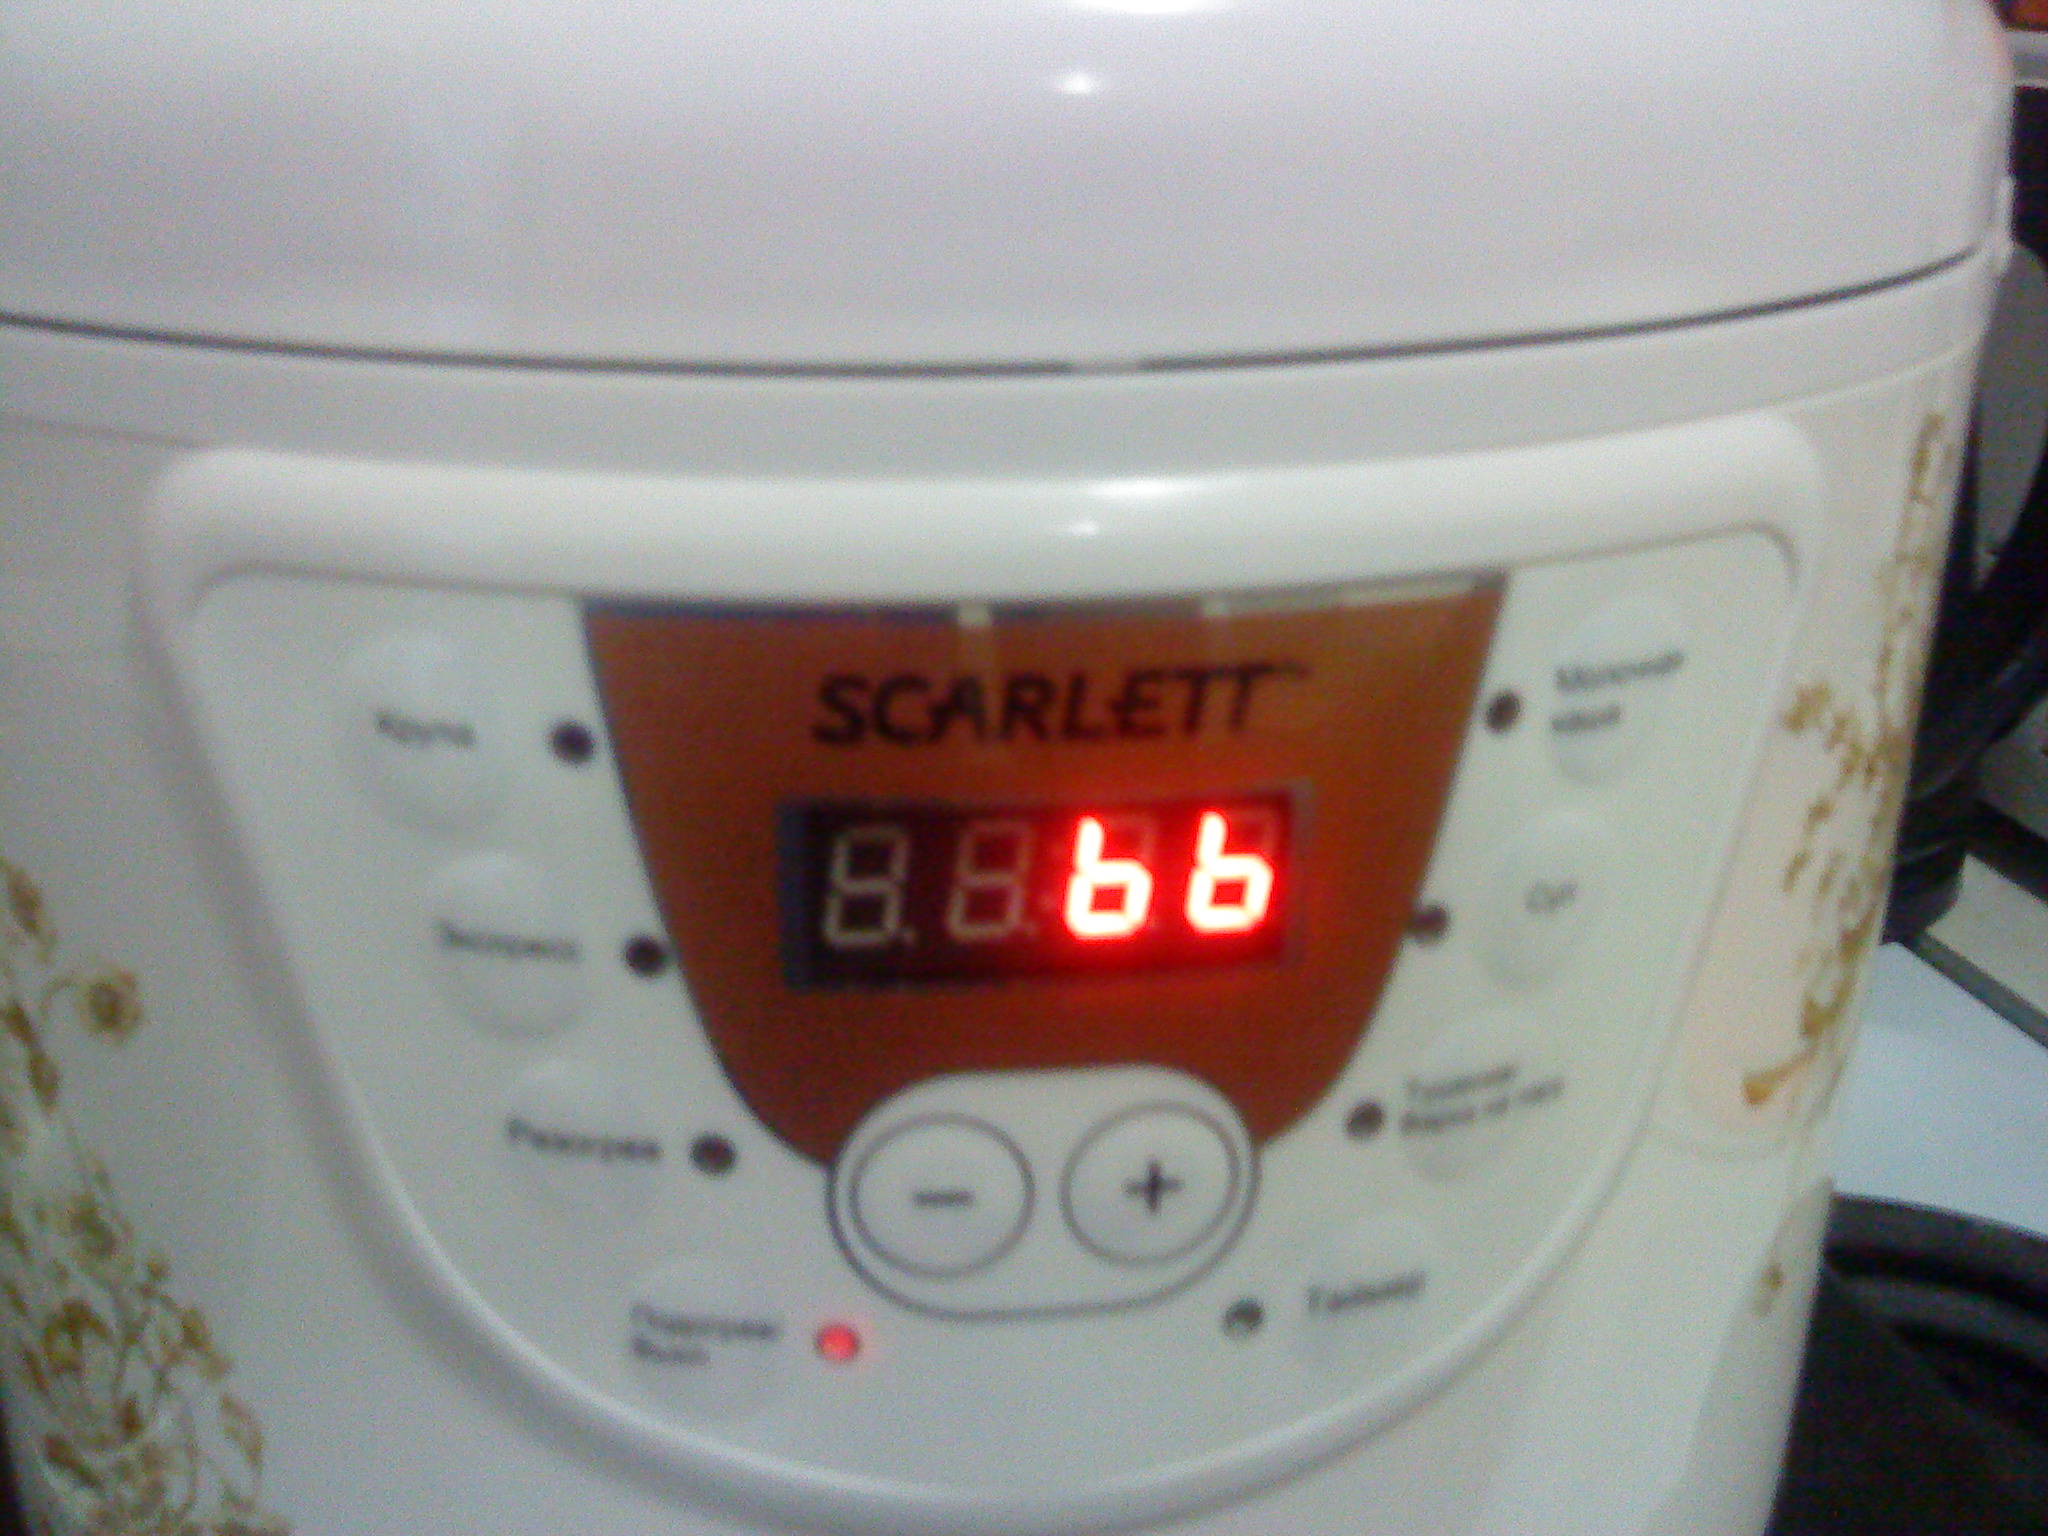 Multicooker Scarlett SC 410